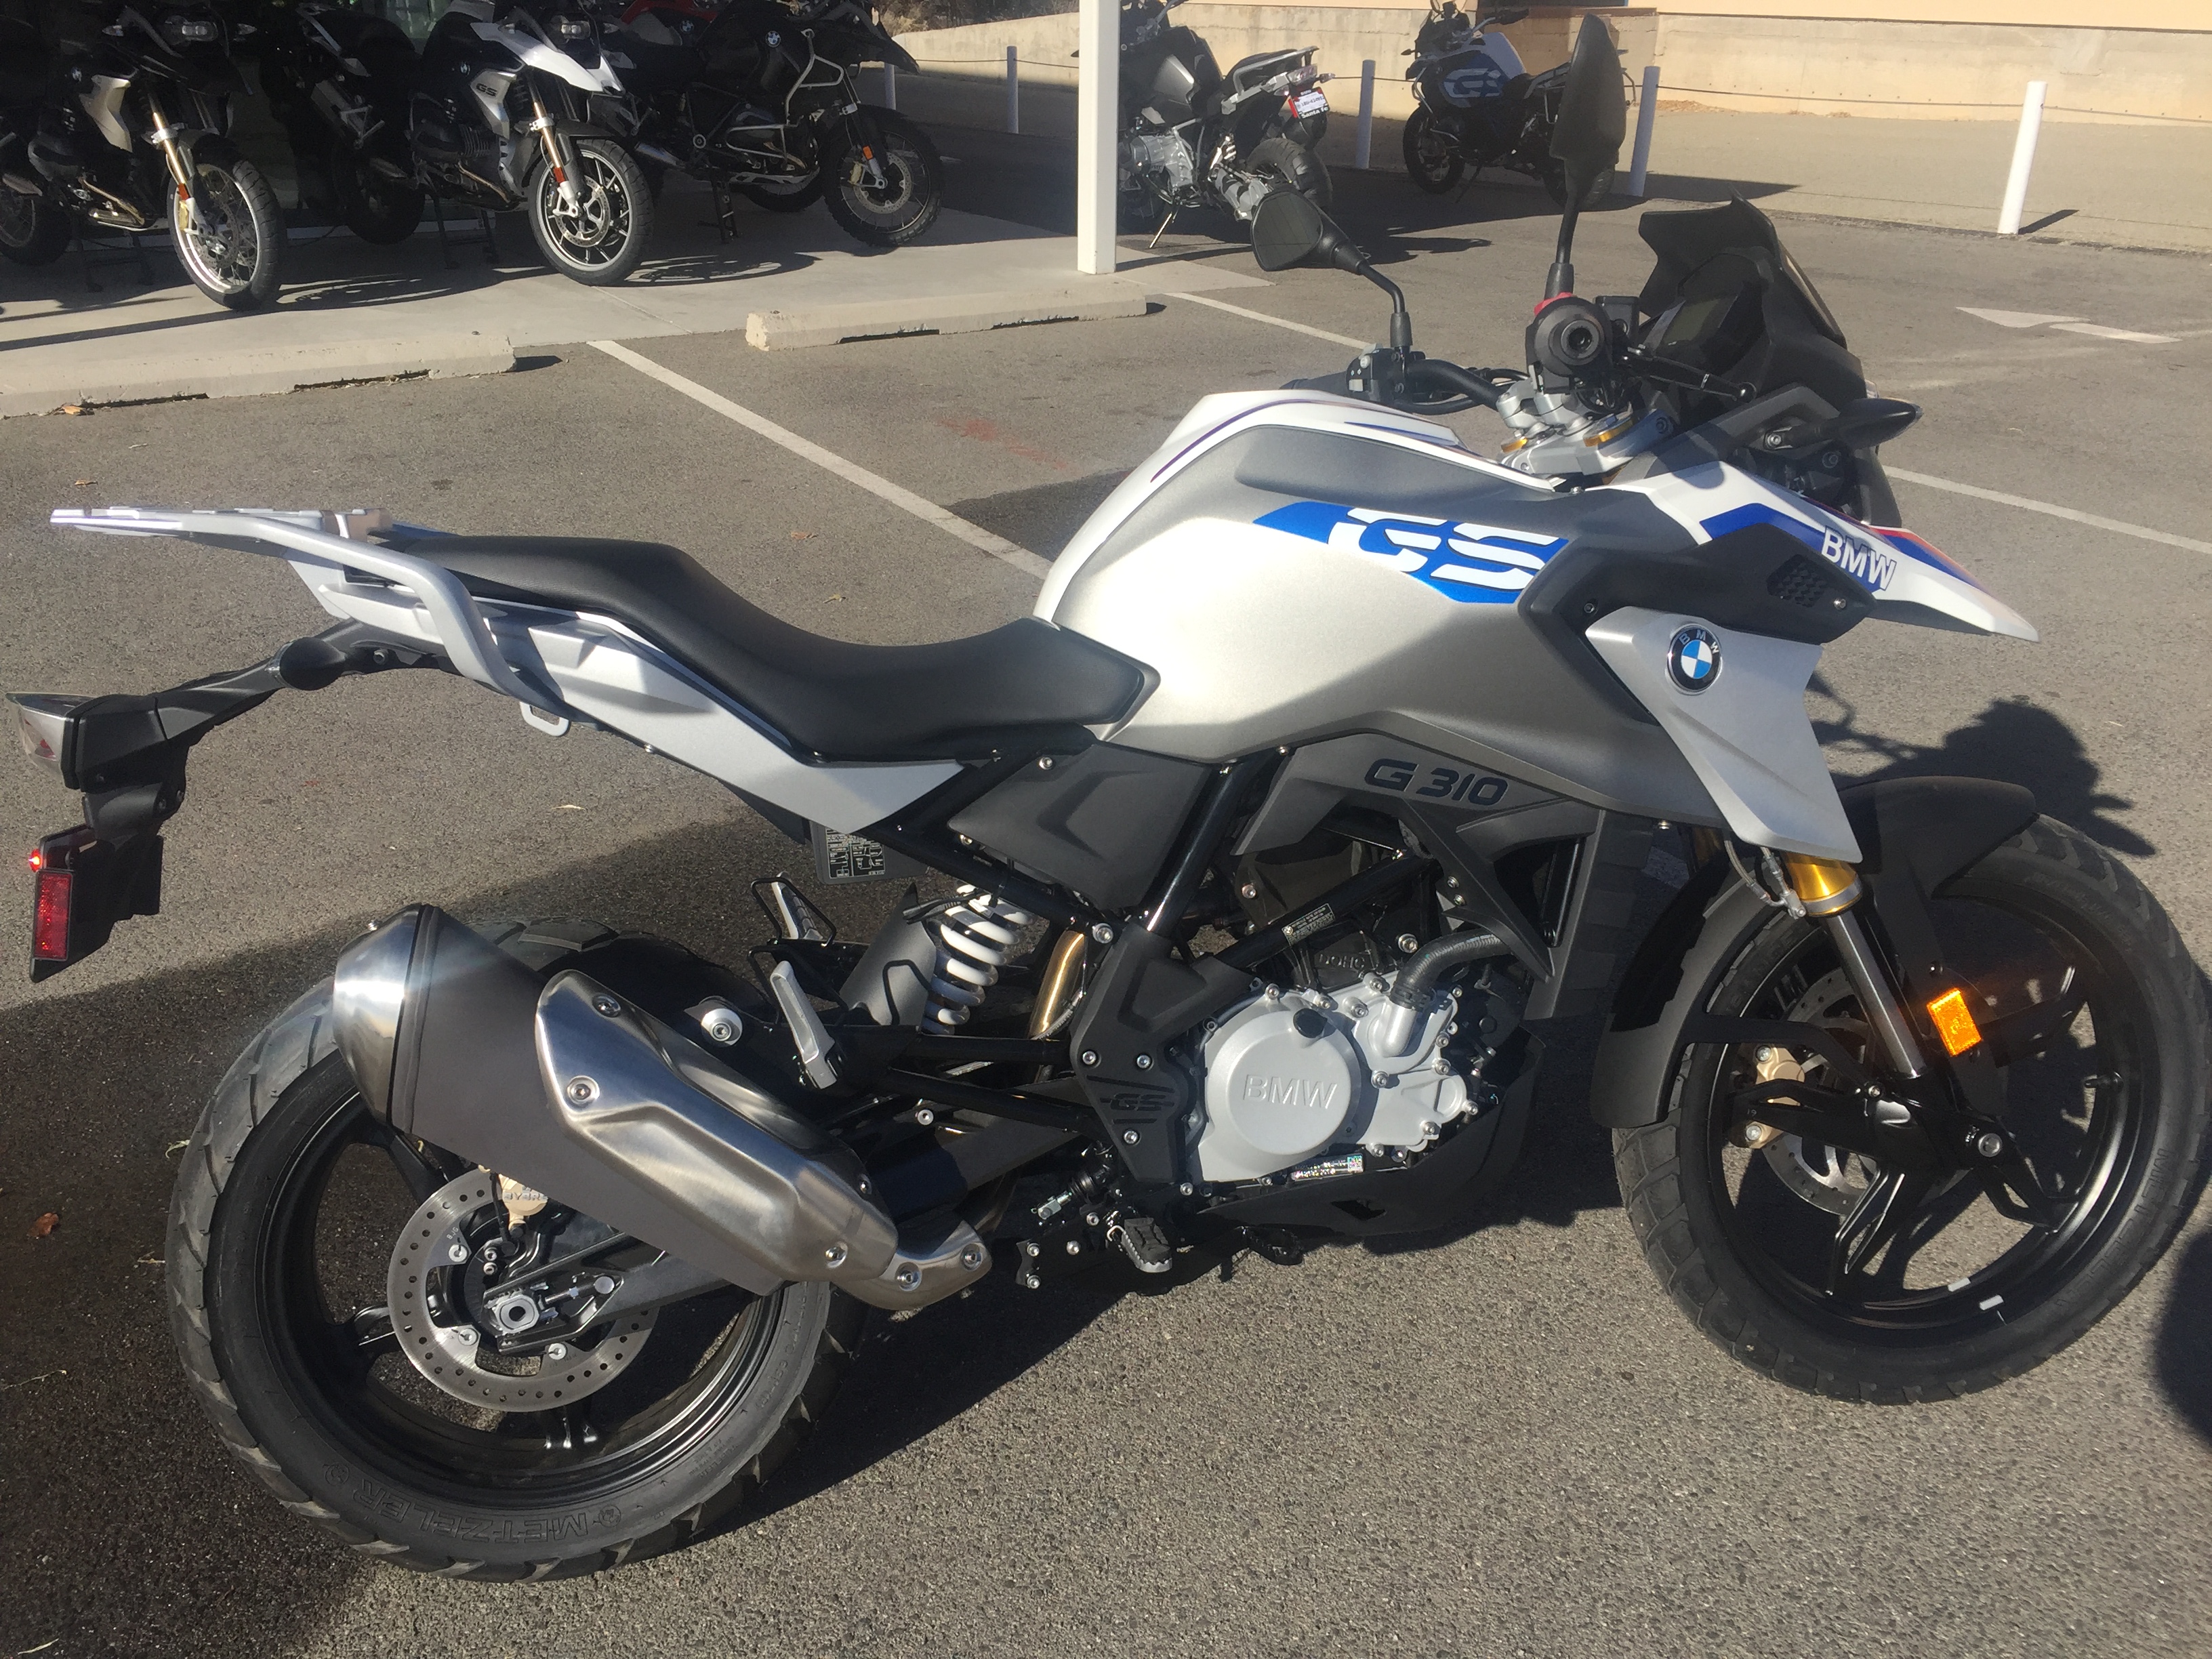 New BMW Motorcycles - G310GS | Santa Fe BMW Motorcycles | Santa Fe, NM